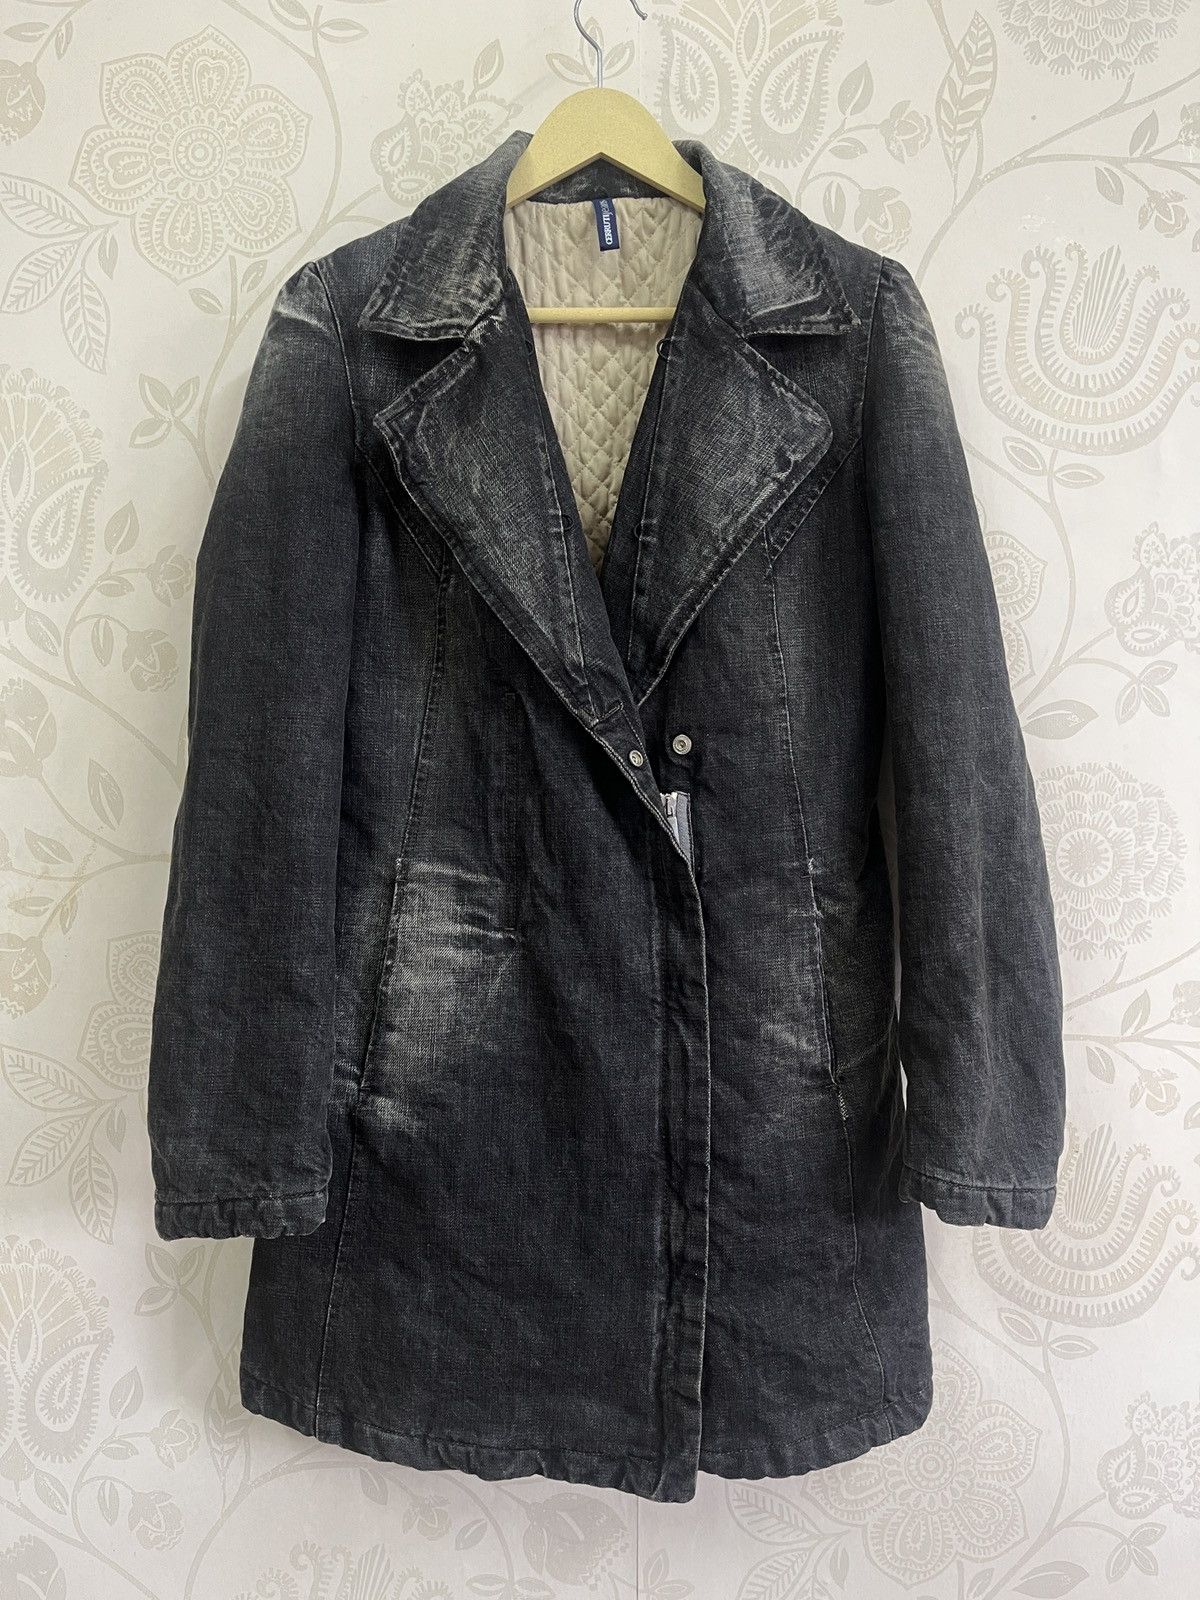 Black Vintage Cerruti Jeans Quilted Italian Jacket - 3